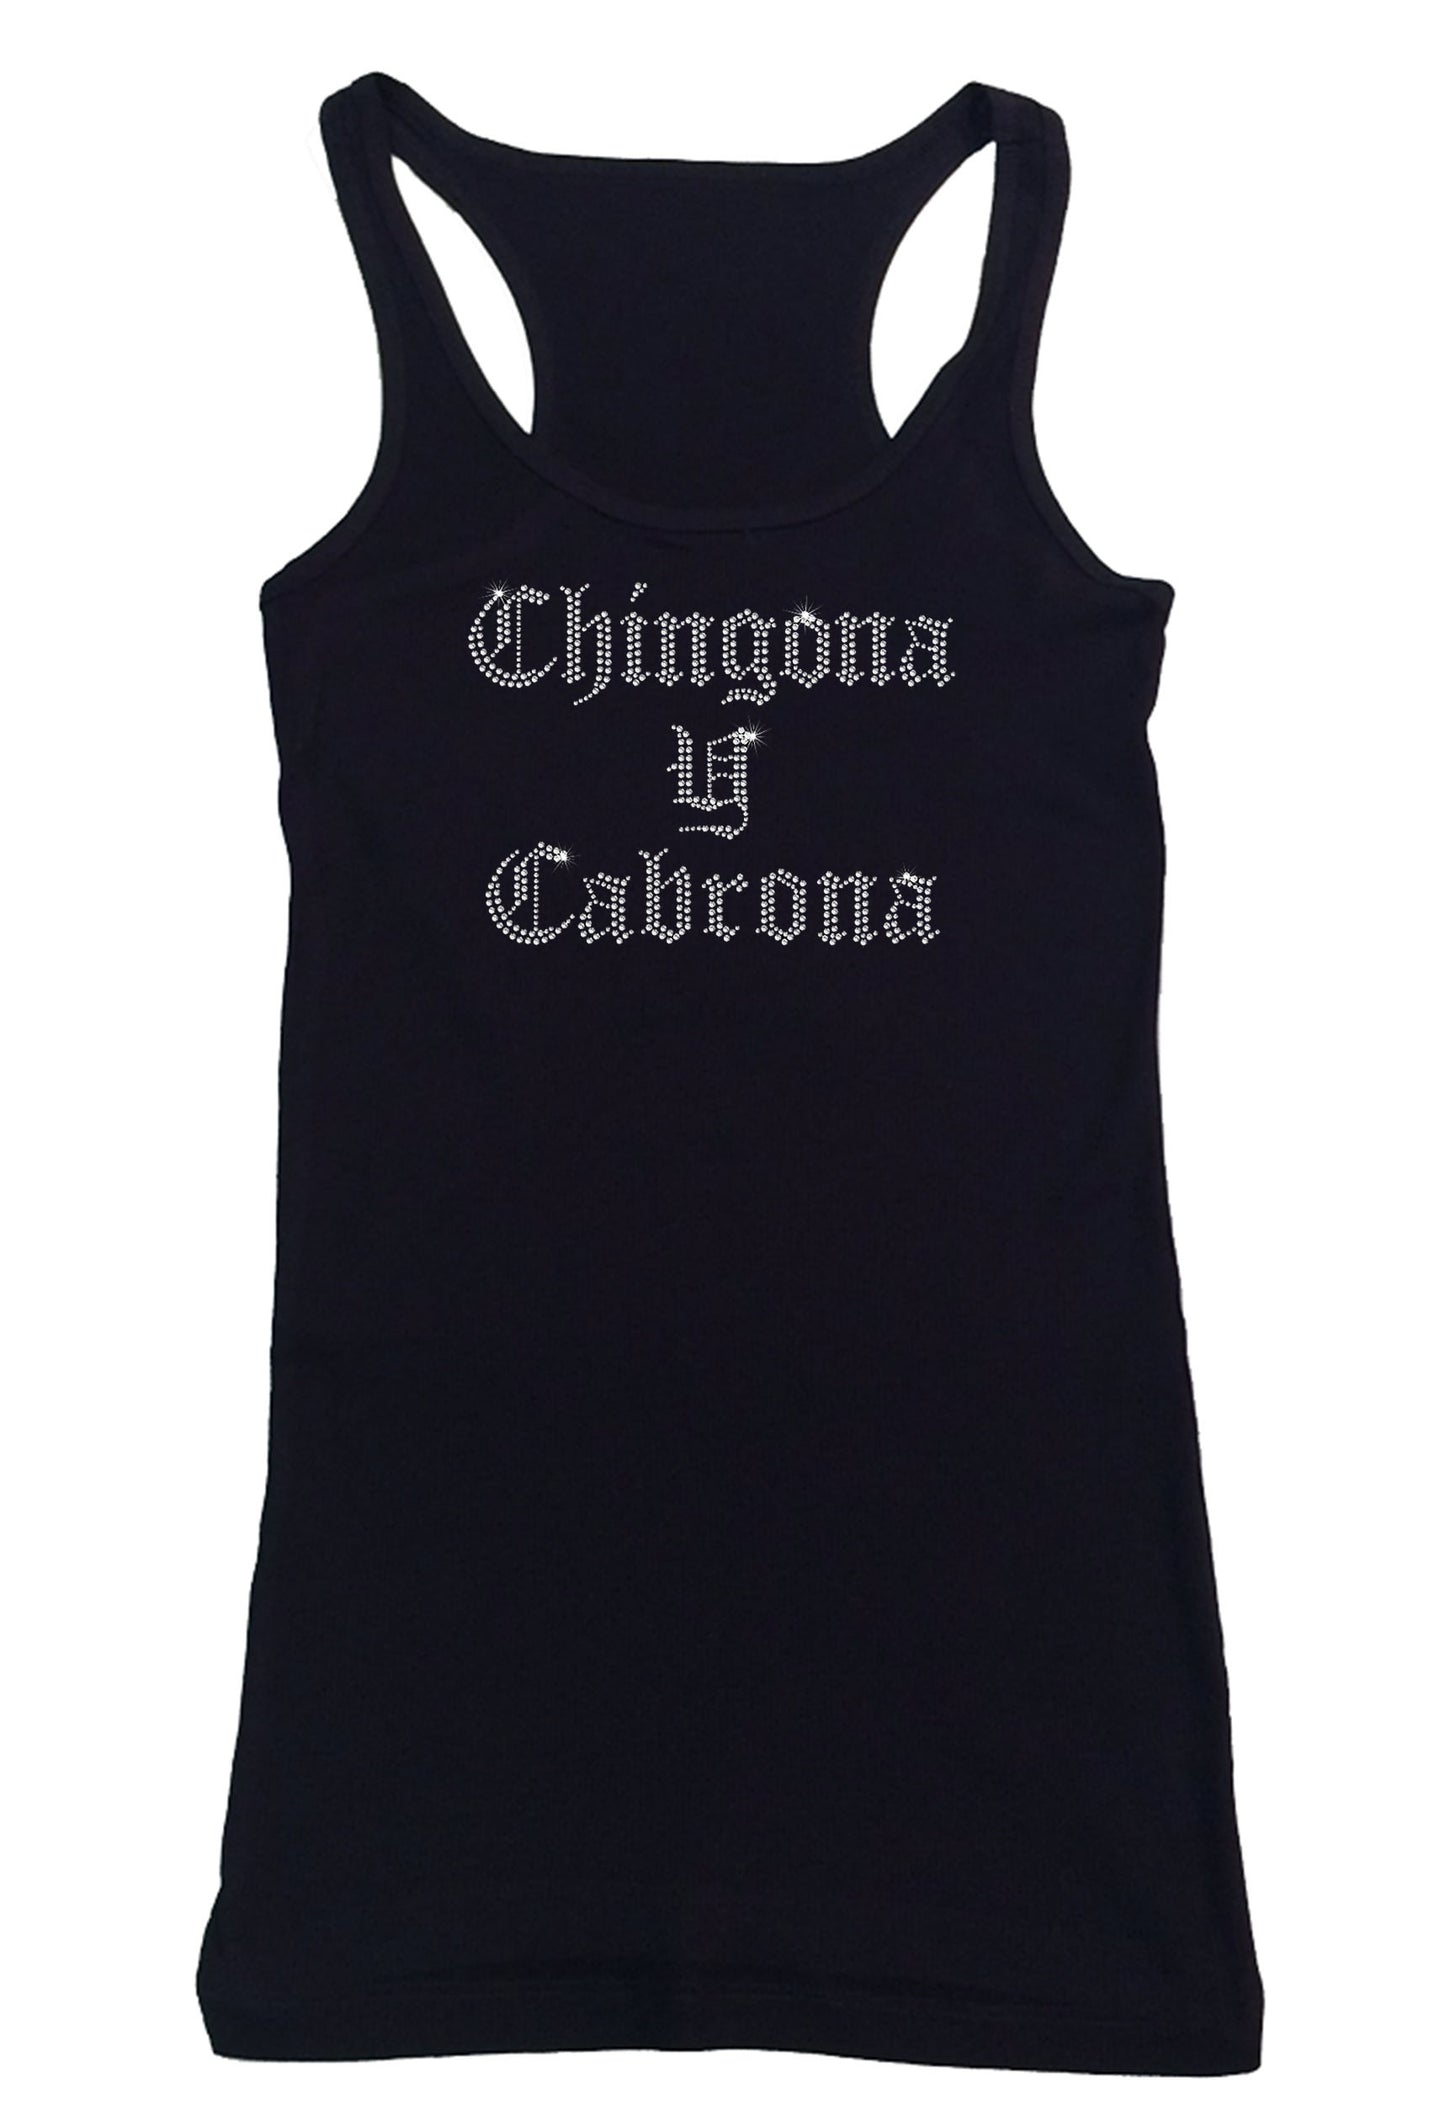 Women's Rhinestone Fitted Shirt Chingona y Cabrona